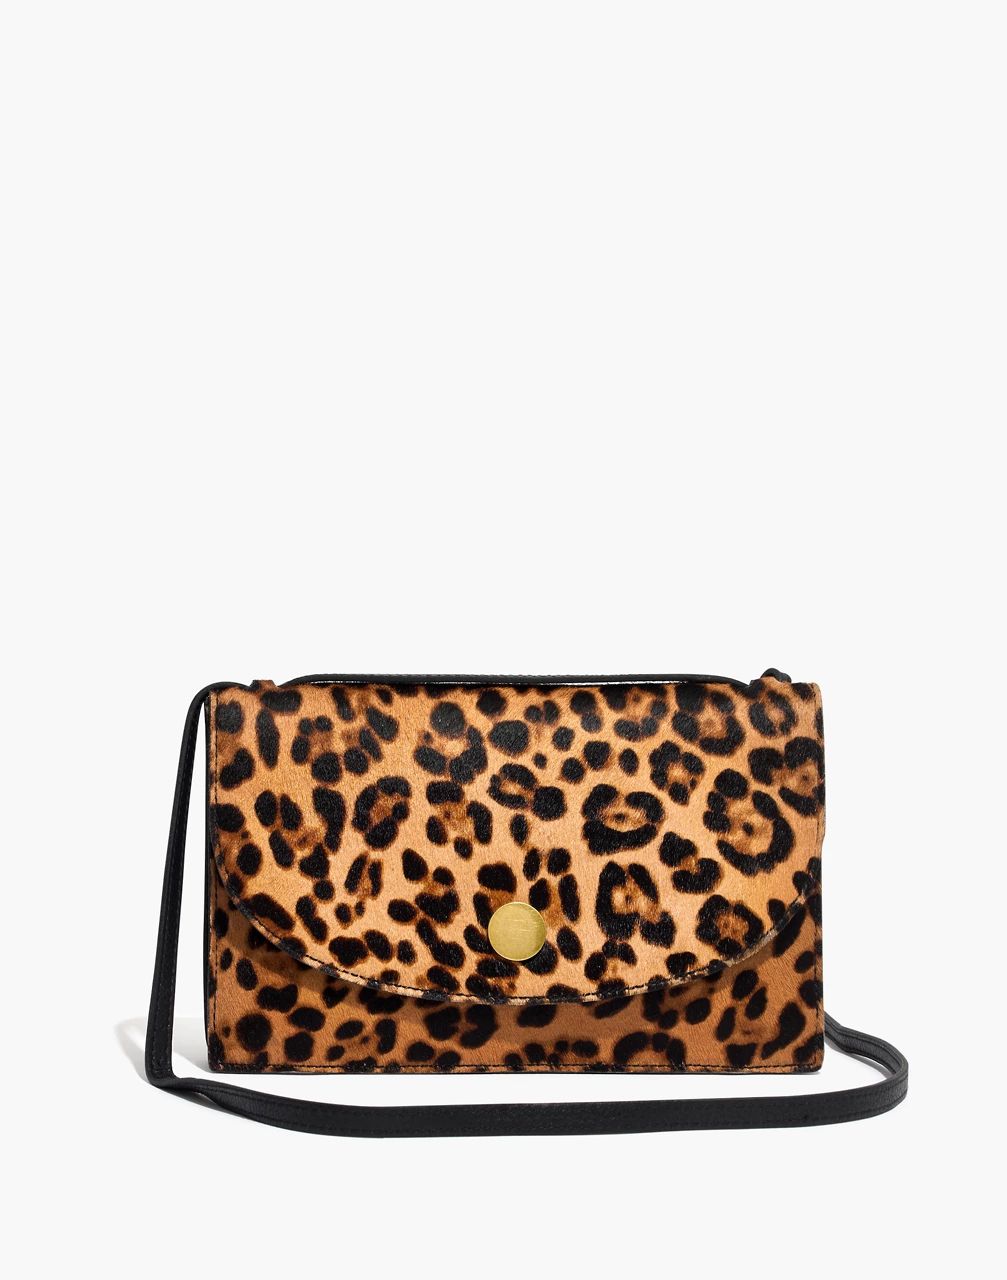 The Slim Convertible Bag in Leopard Calf Hair | Madewell